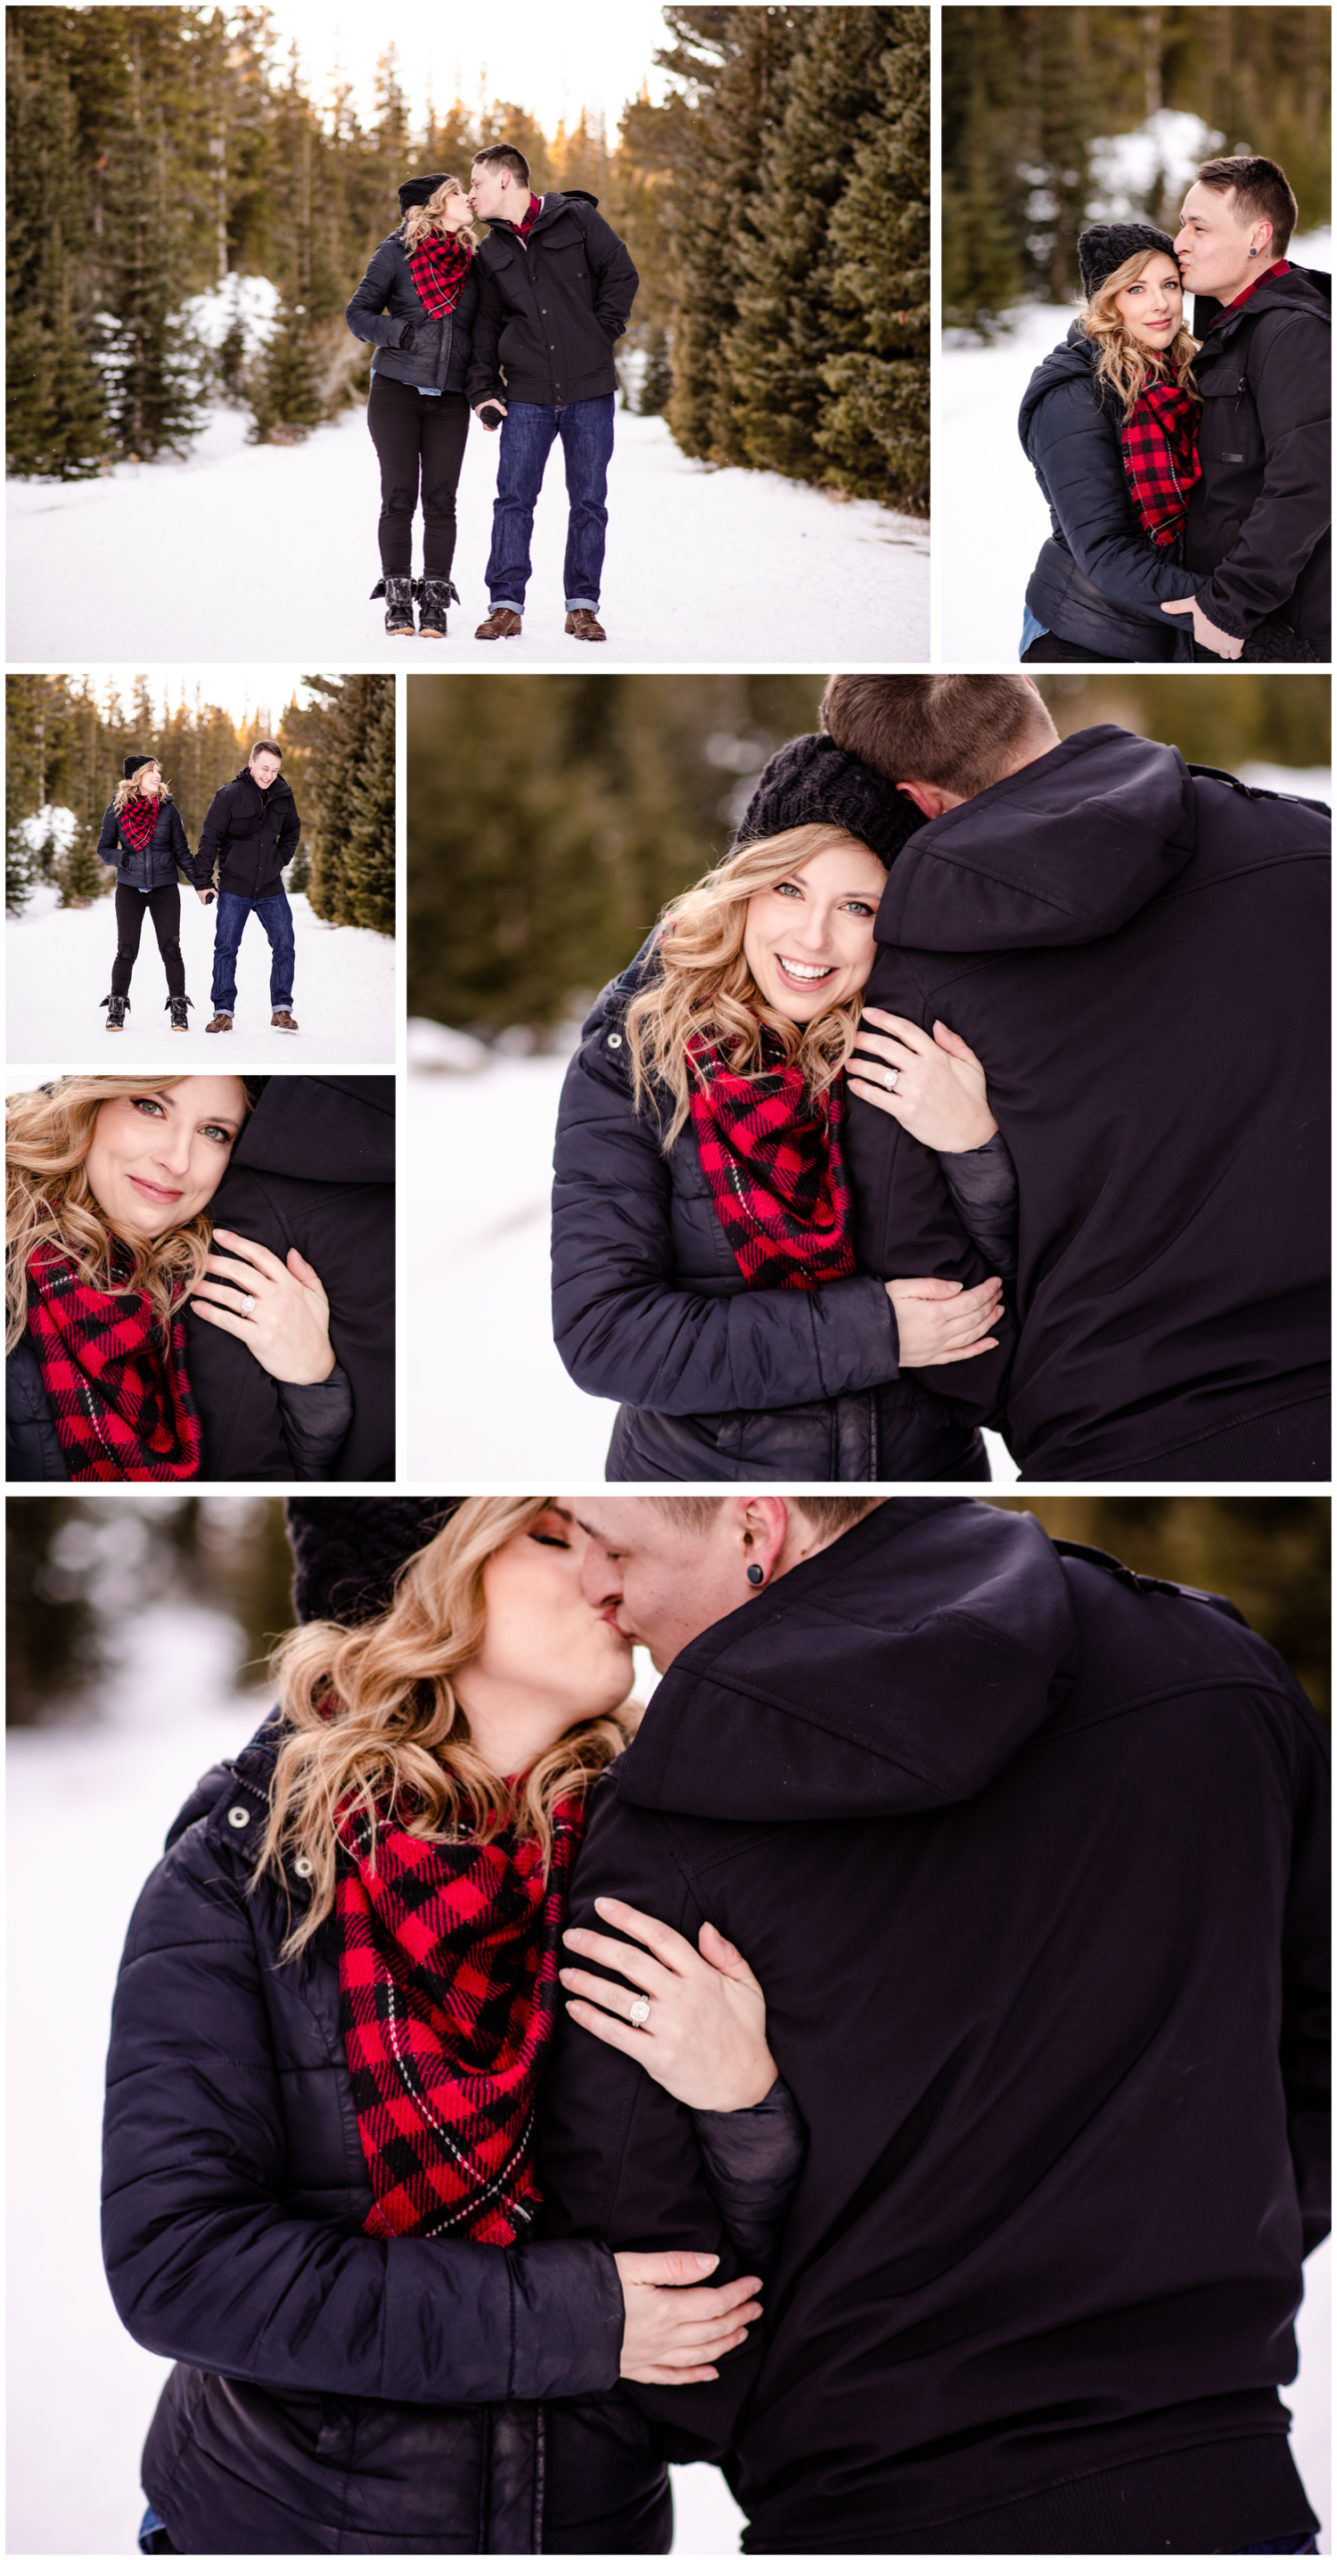 Brainard Lake Engagement | Colorado Mountains | Britni Girard Photography - Wedding and Engagement Photographers - Snowy engagement in rocky mountains